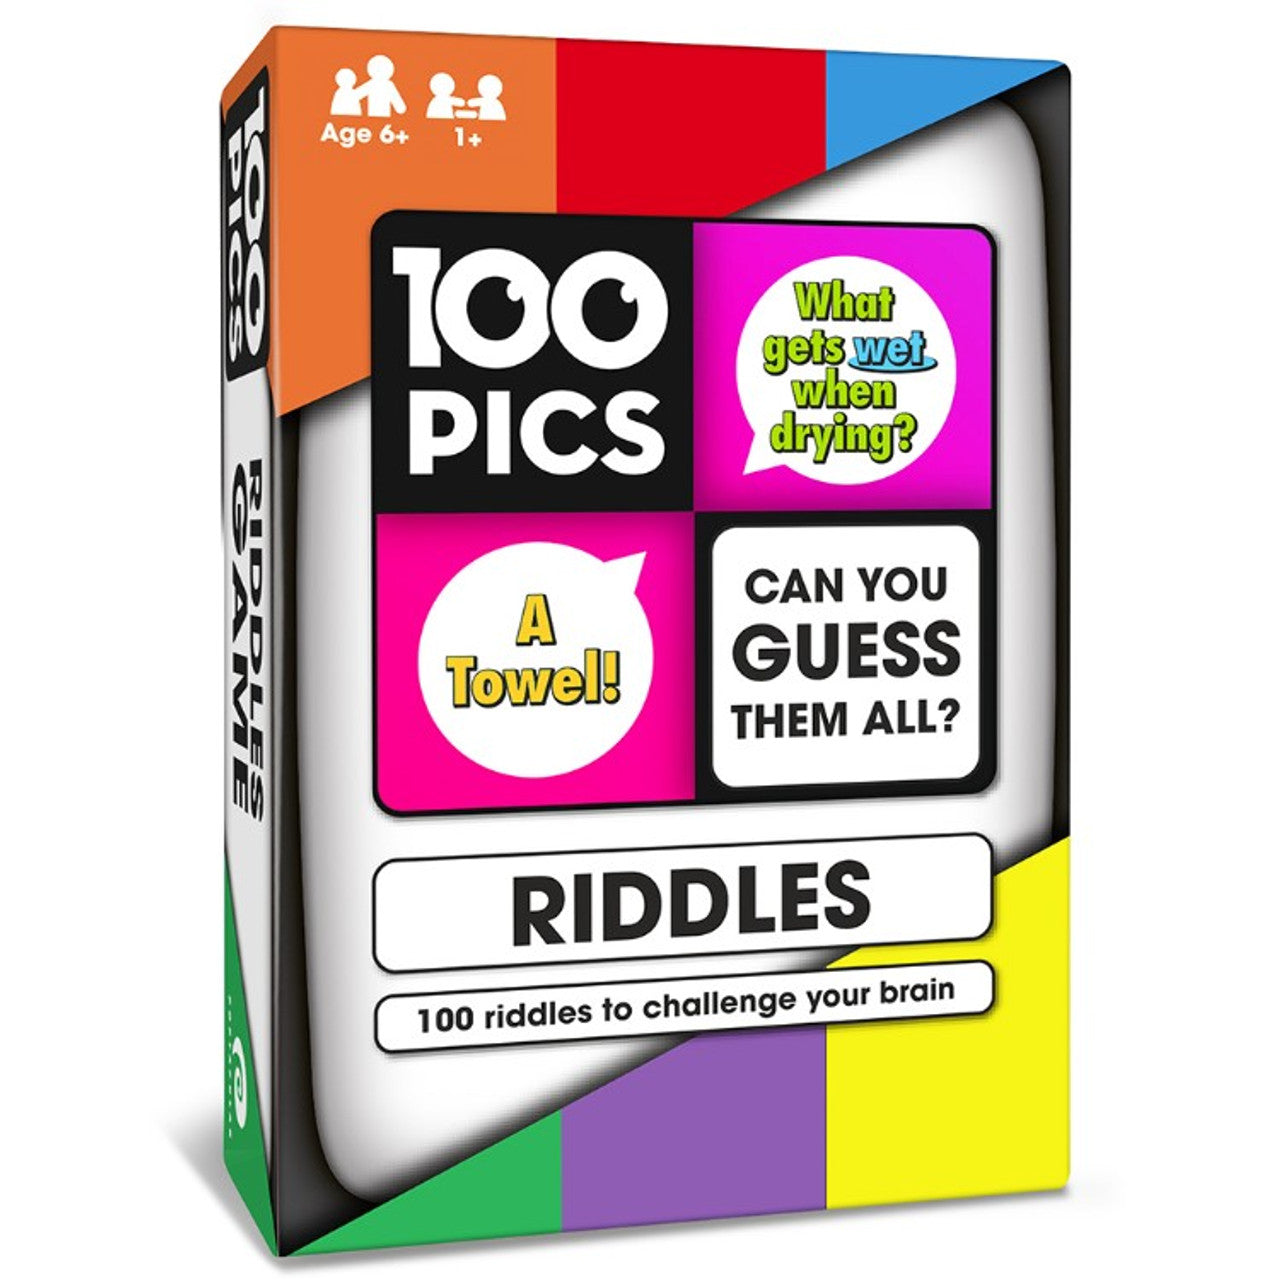 100 Pics: Riddles